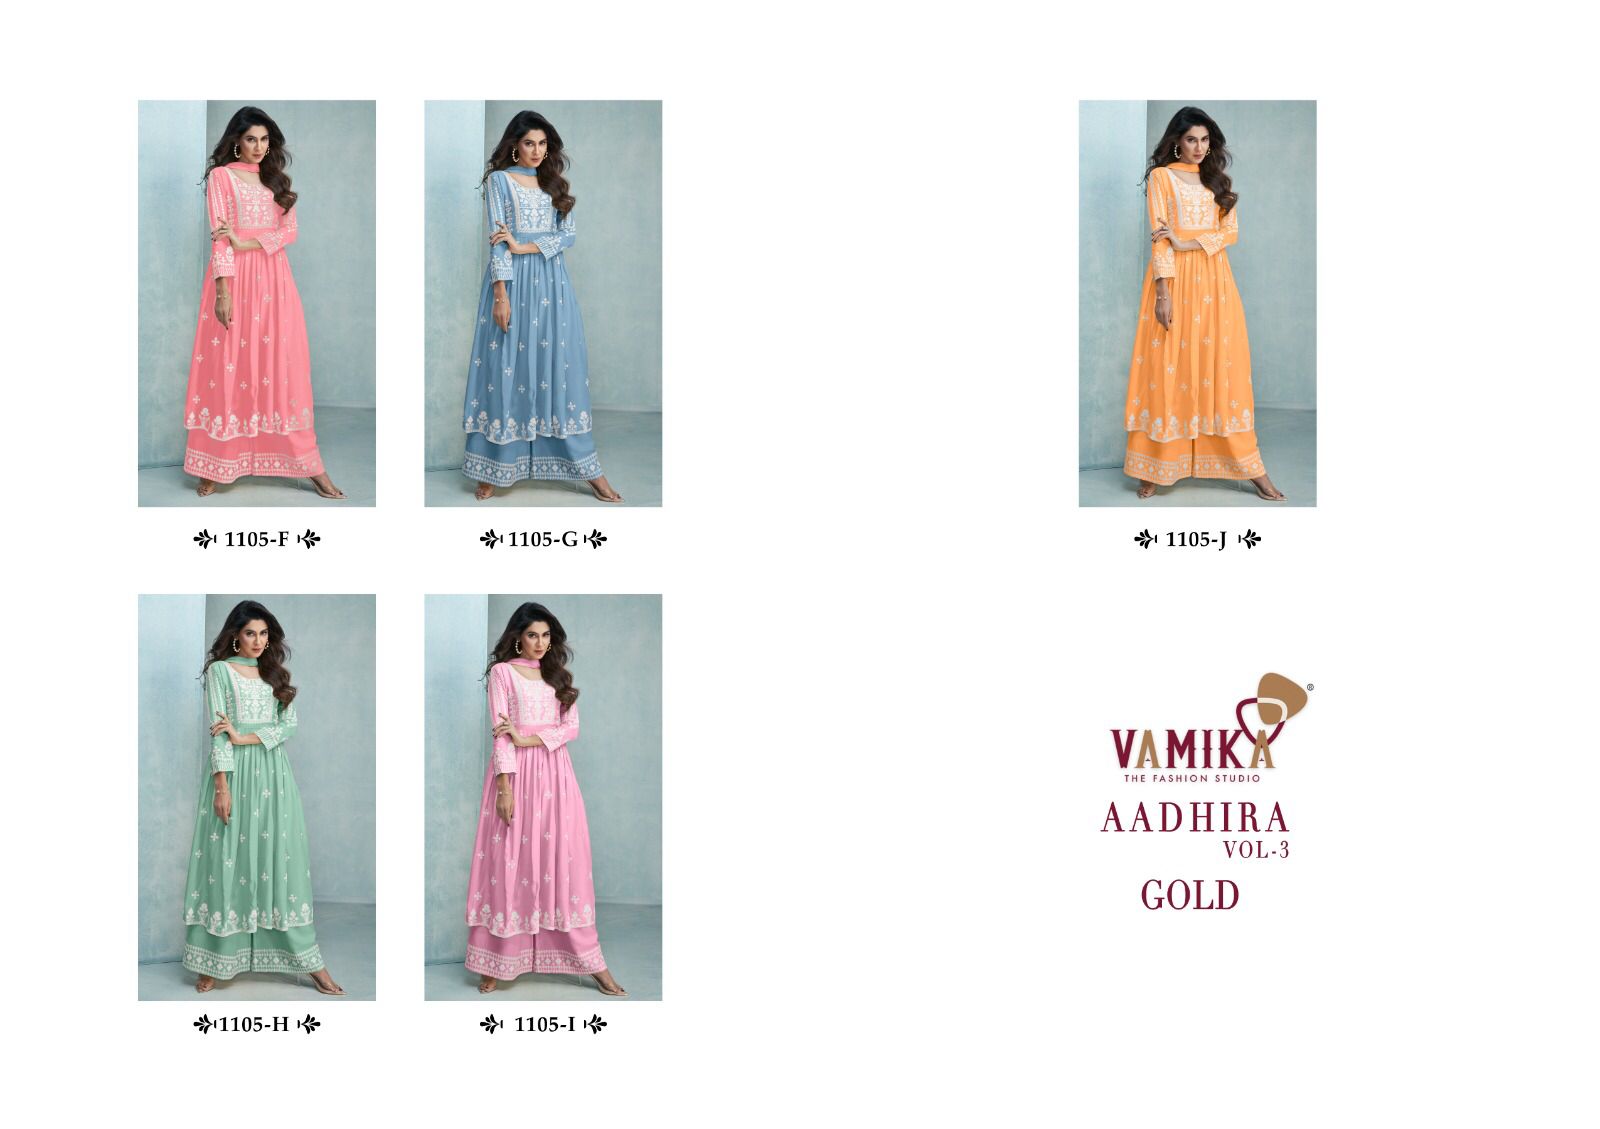 Vamika Aadhira Vol 3 Gold collection 2